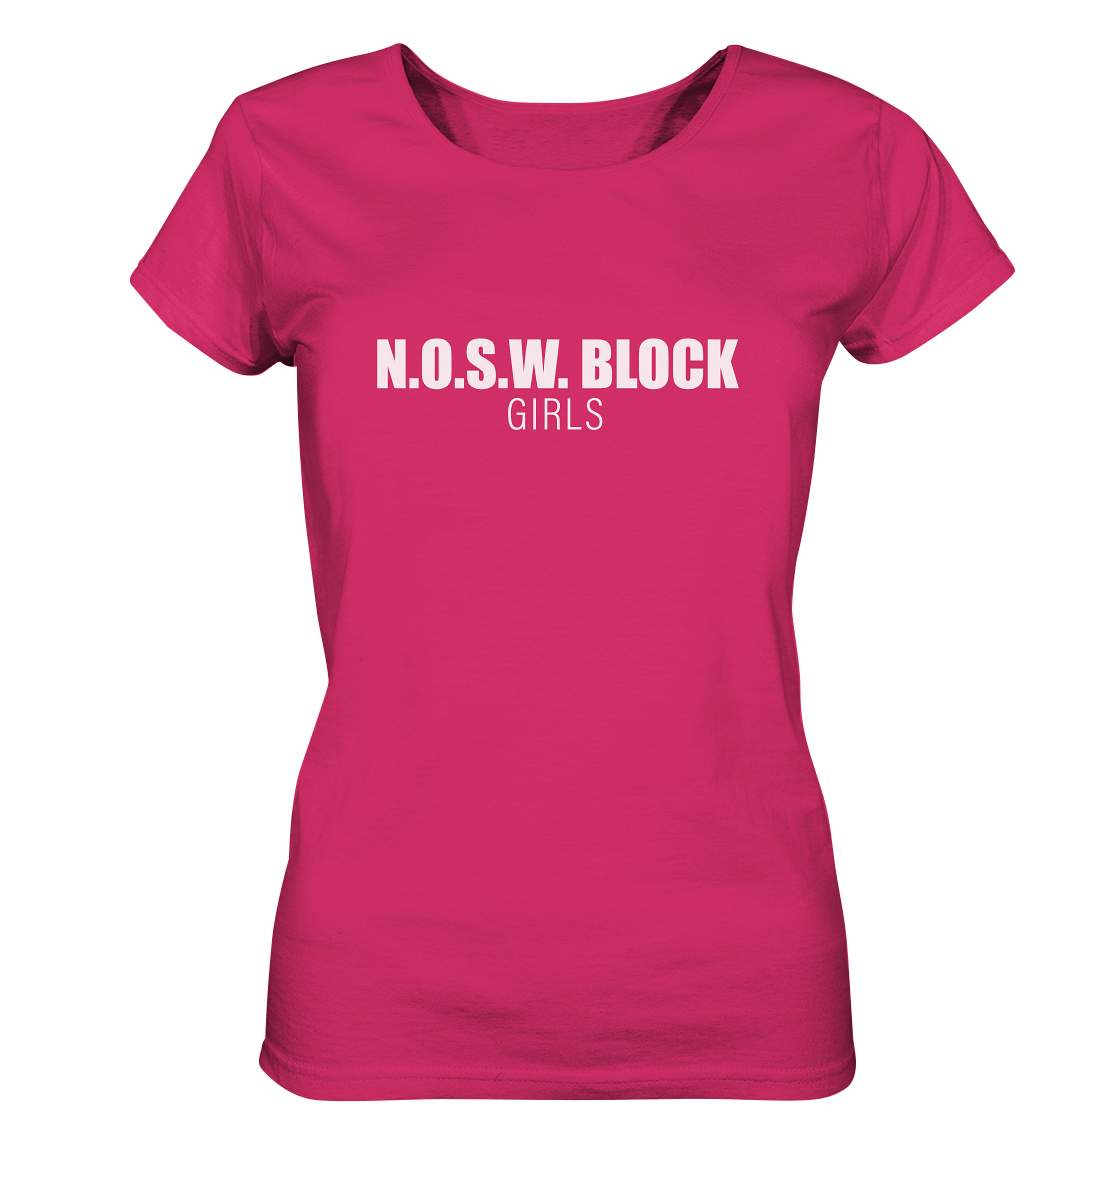 N.O.S.W. BLOCK Shirt "N.O.S.W. BLOCK GIRLS" Girls Organic T-Shirt himbeere